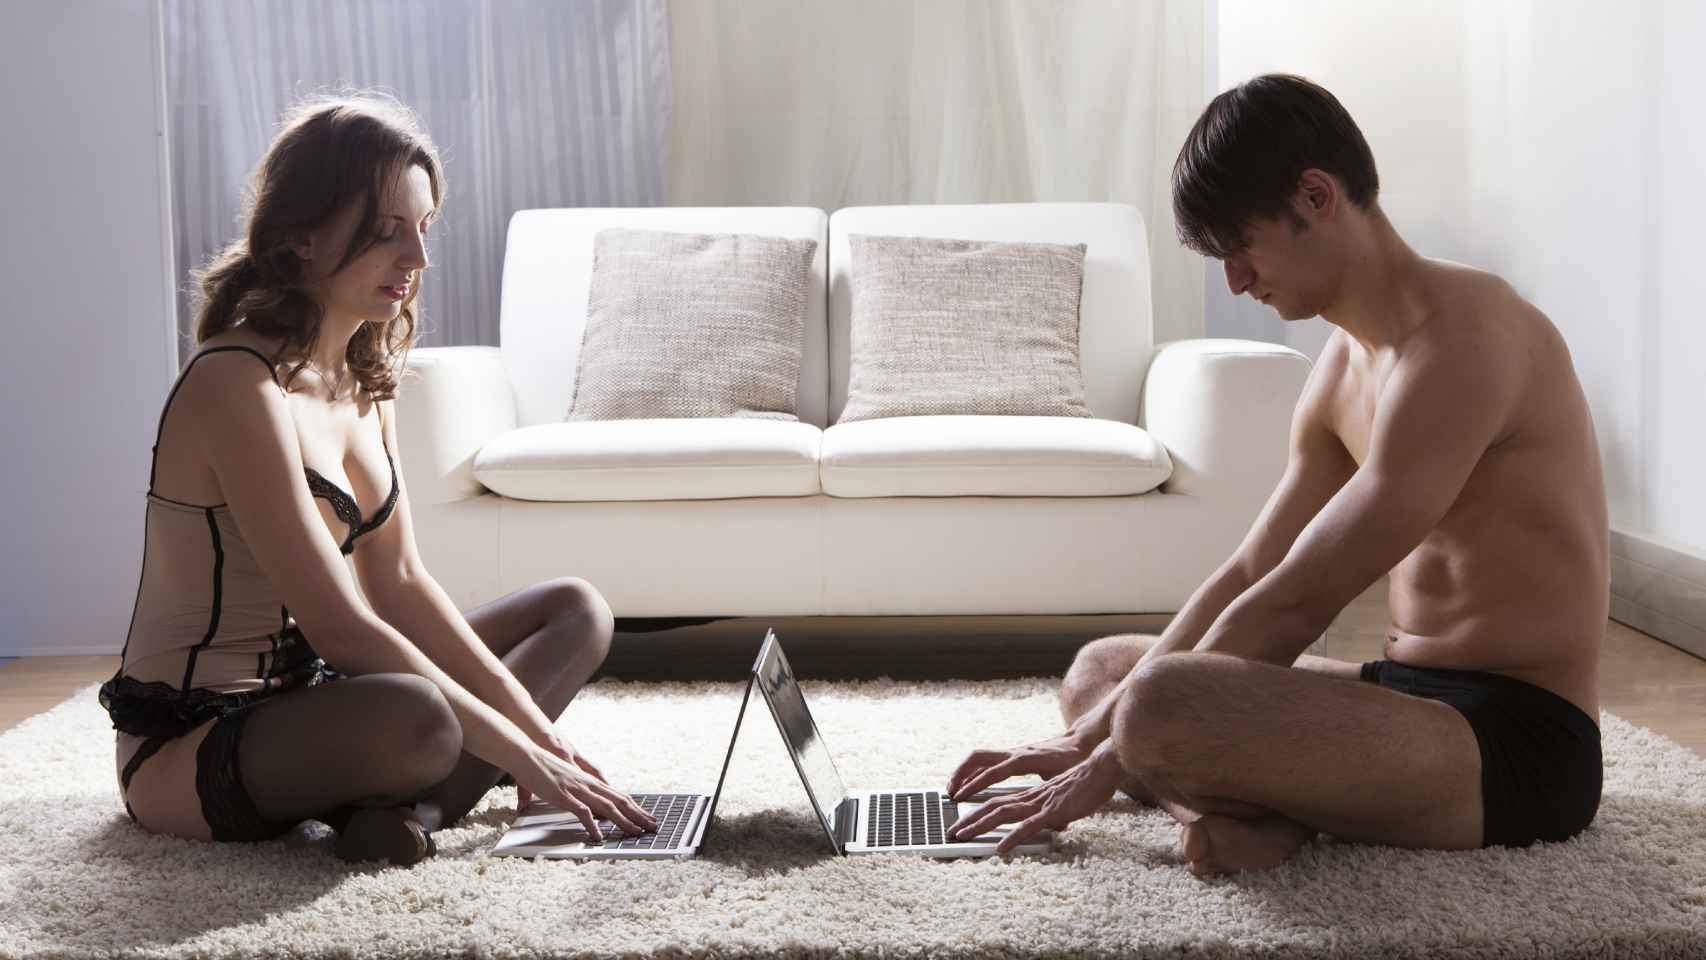 La vida en pareja se ve perjudicada por la tecnología. iStock